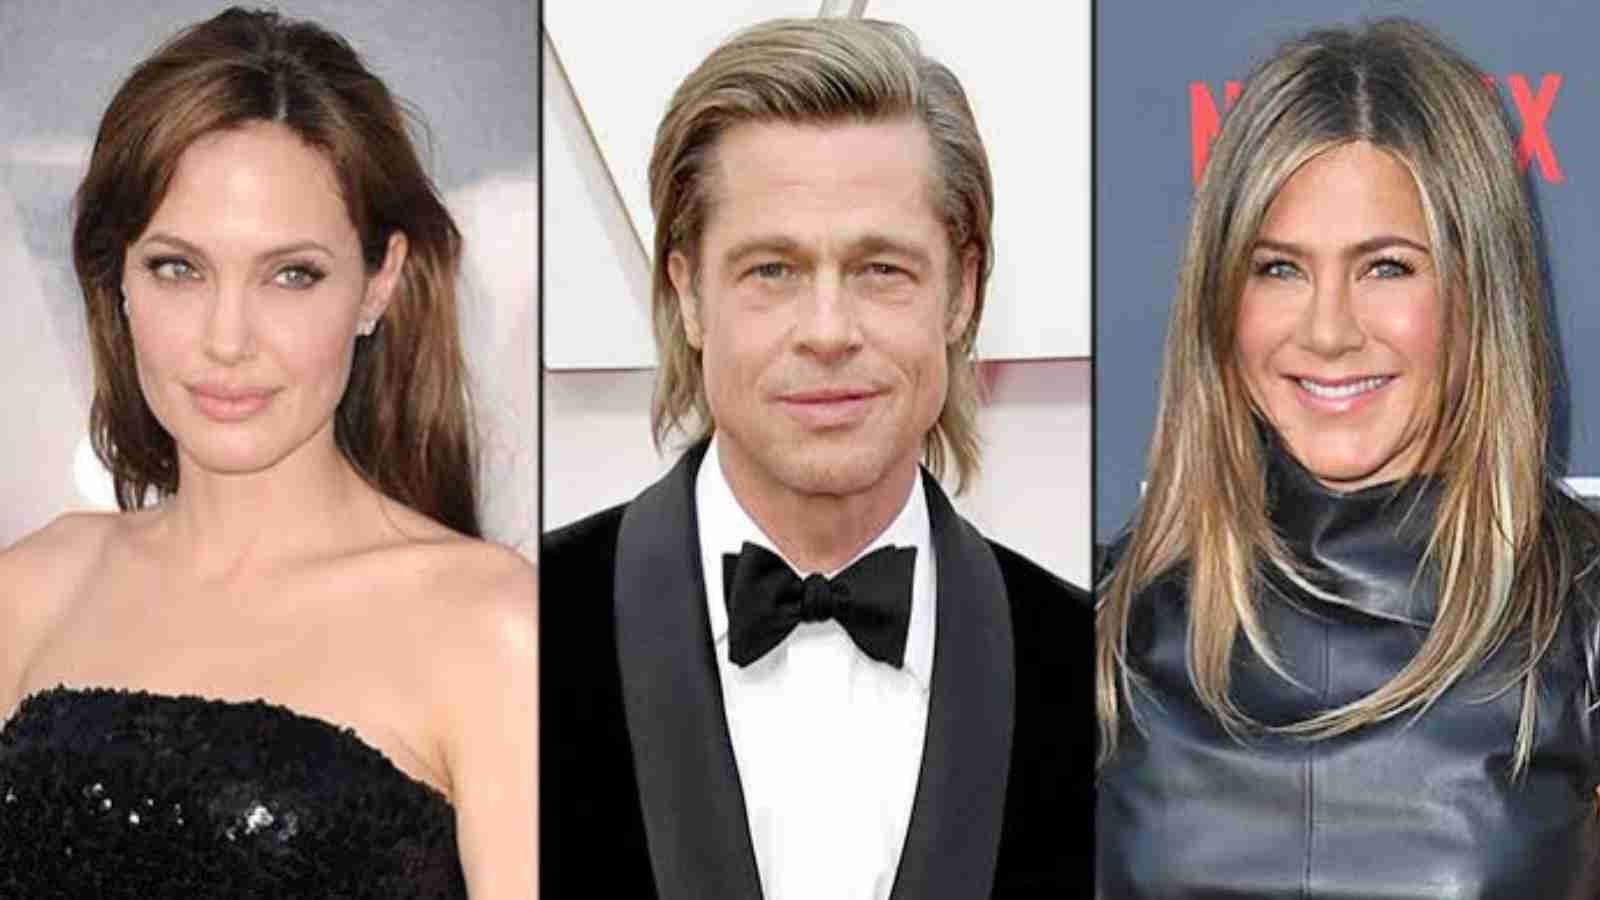 Angelina Jolie, Brad Pitt, and Jennifer Aniston